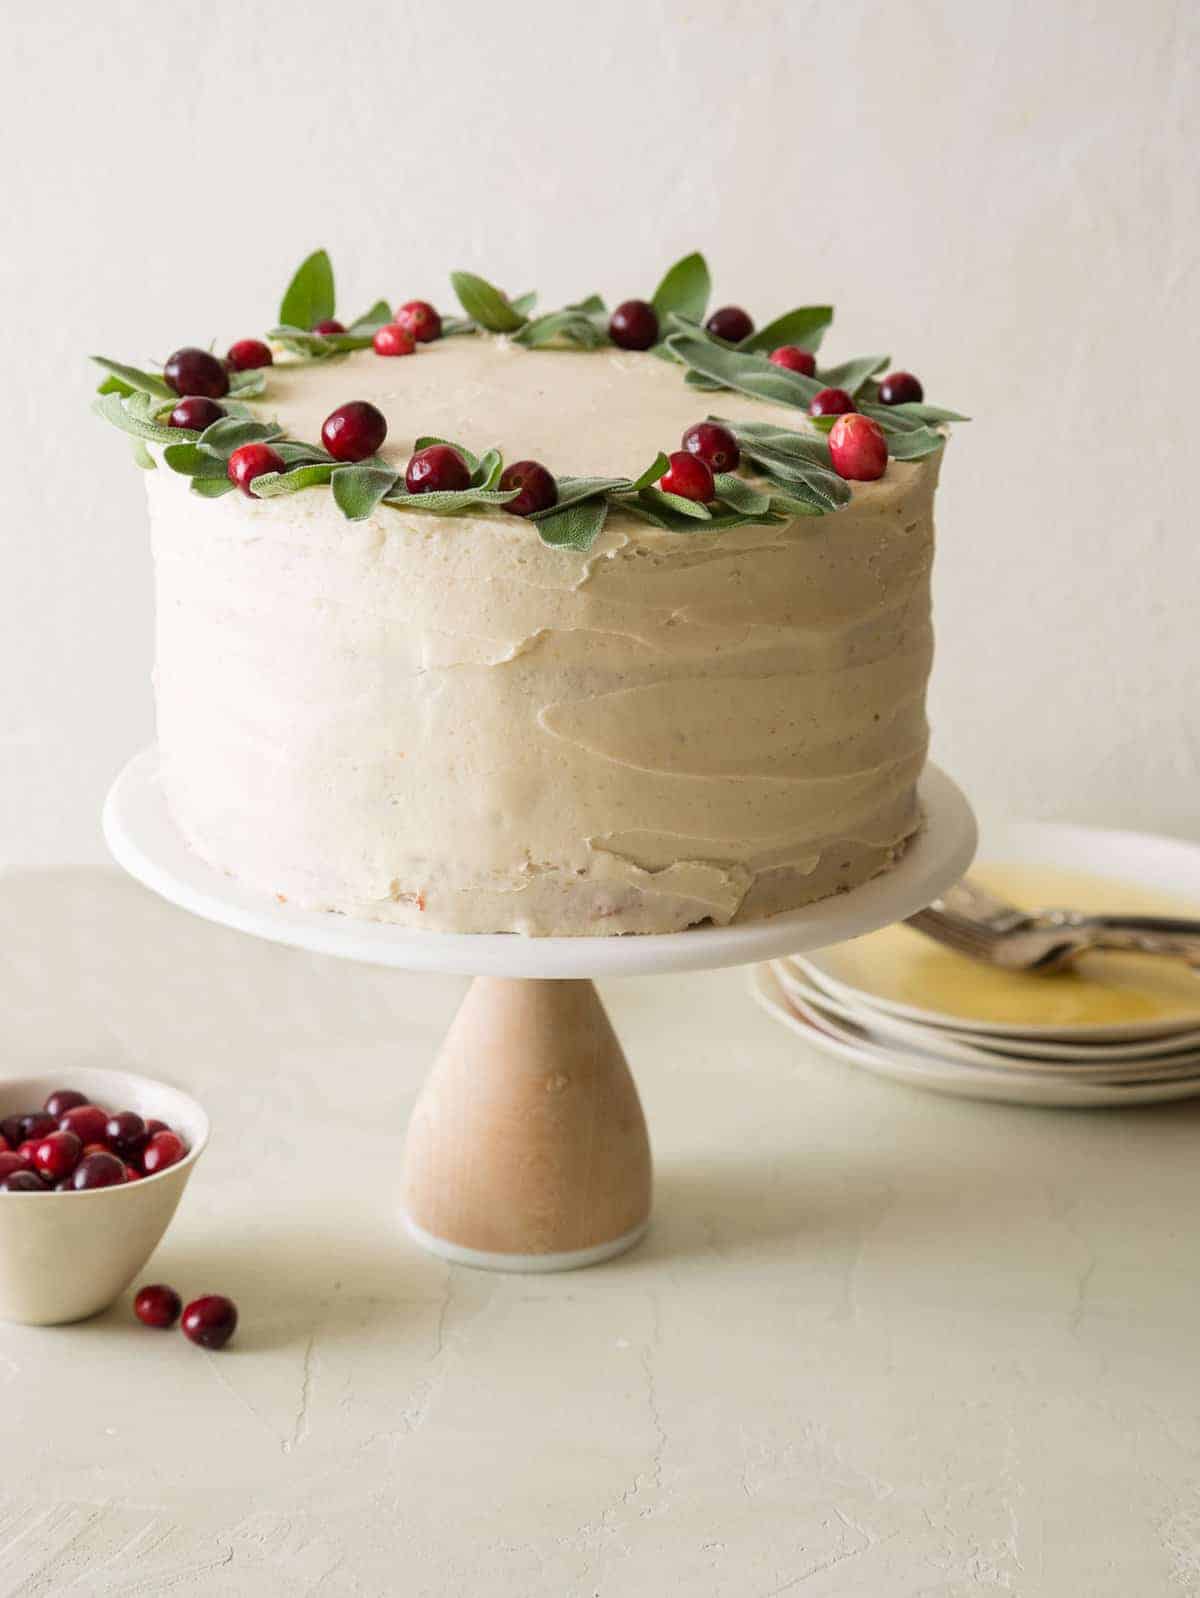 Cranberry Christmas Cake Recipe: How to Make It